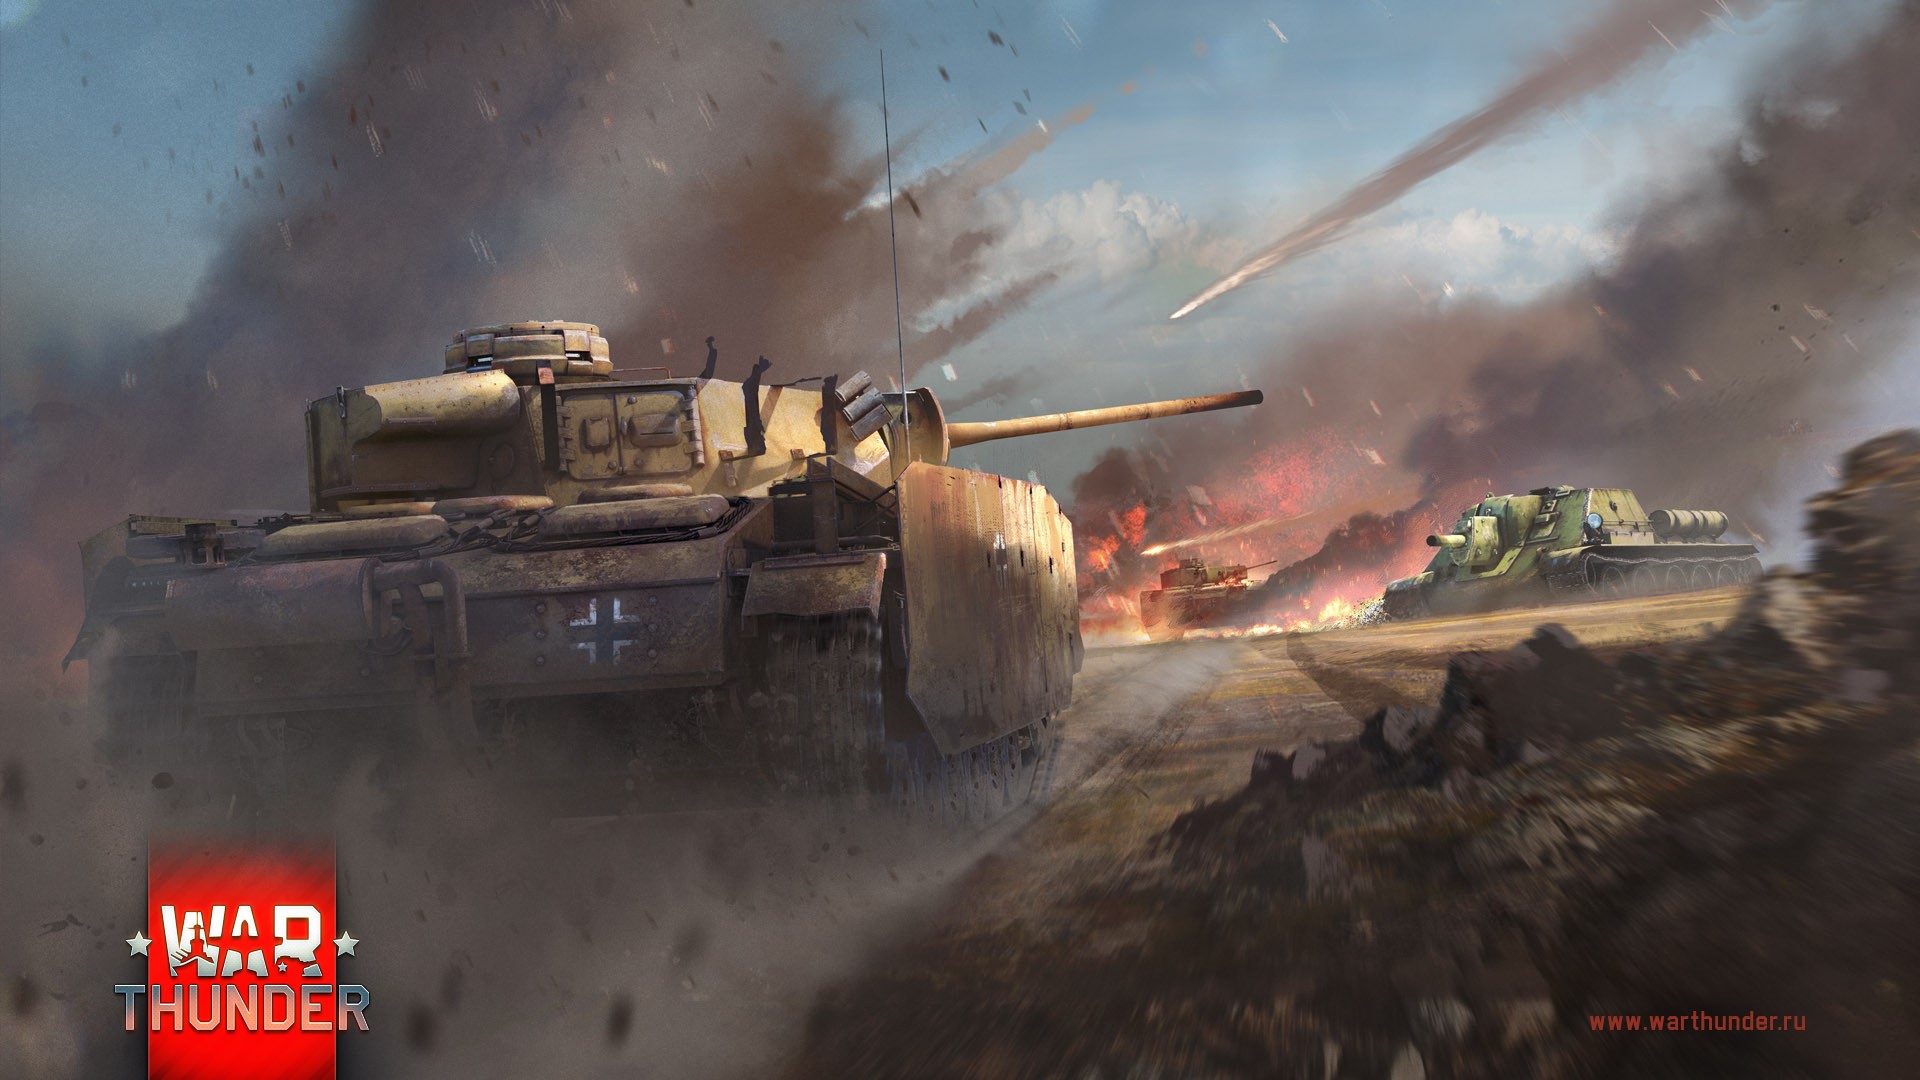 General 1920x1080 War Thunder tank Gaijin Entertainment video games military vehicle military vehicle PC gaming video game art